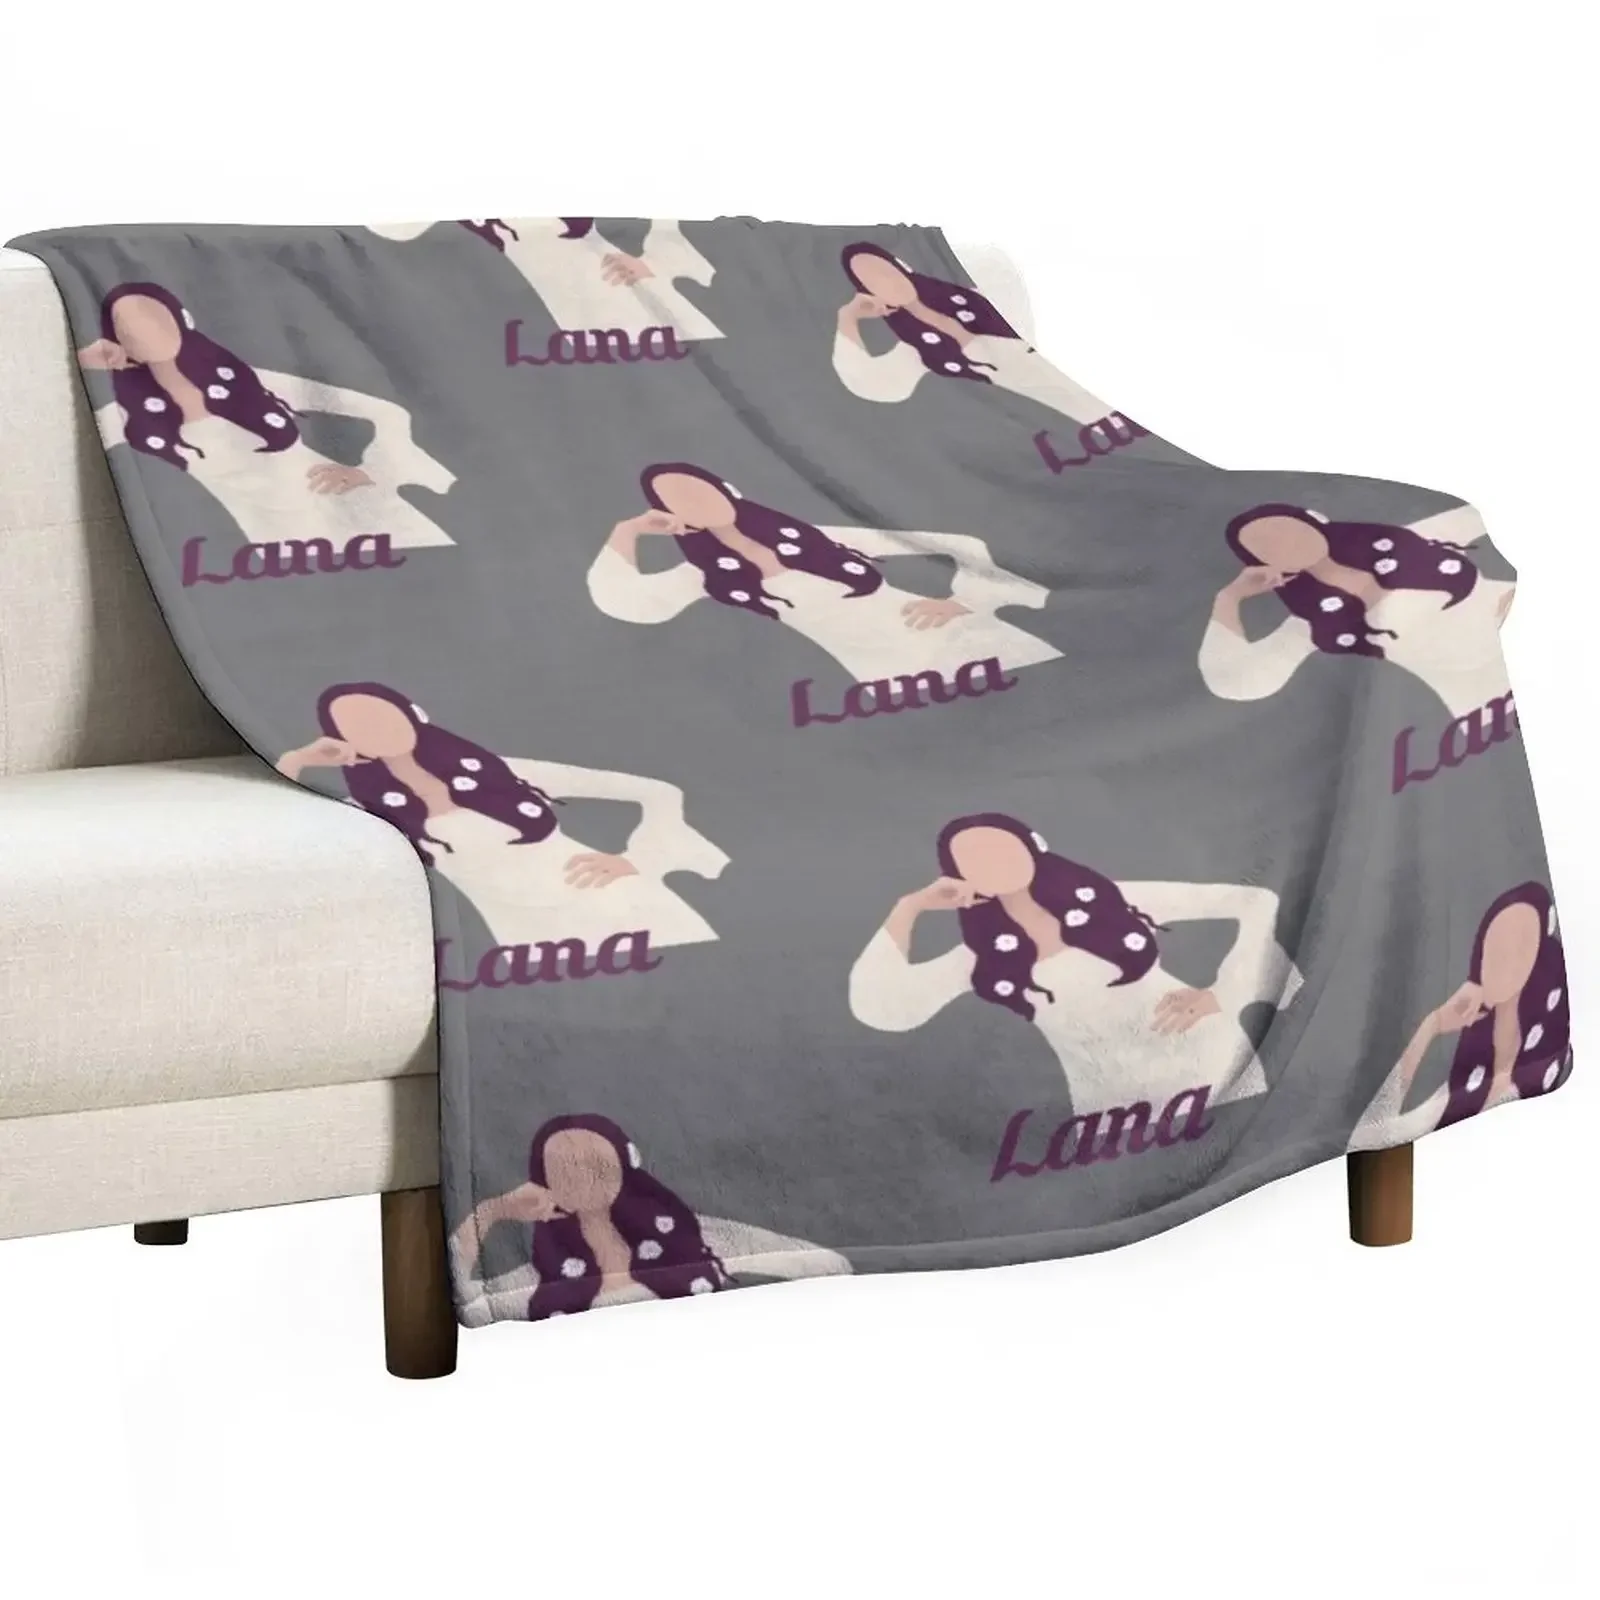 

Одеяло lana_20, одеяла и одеяла, роскошные брендовые одеяла